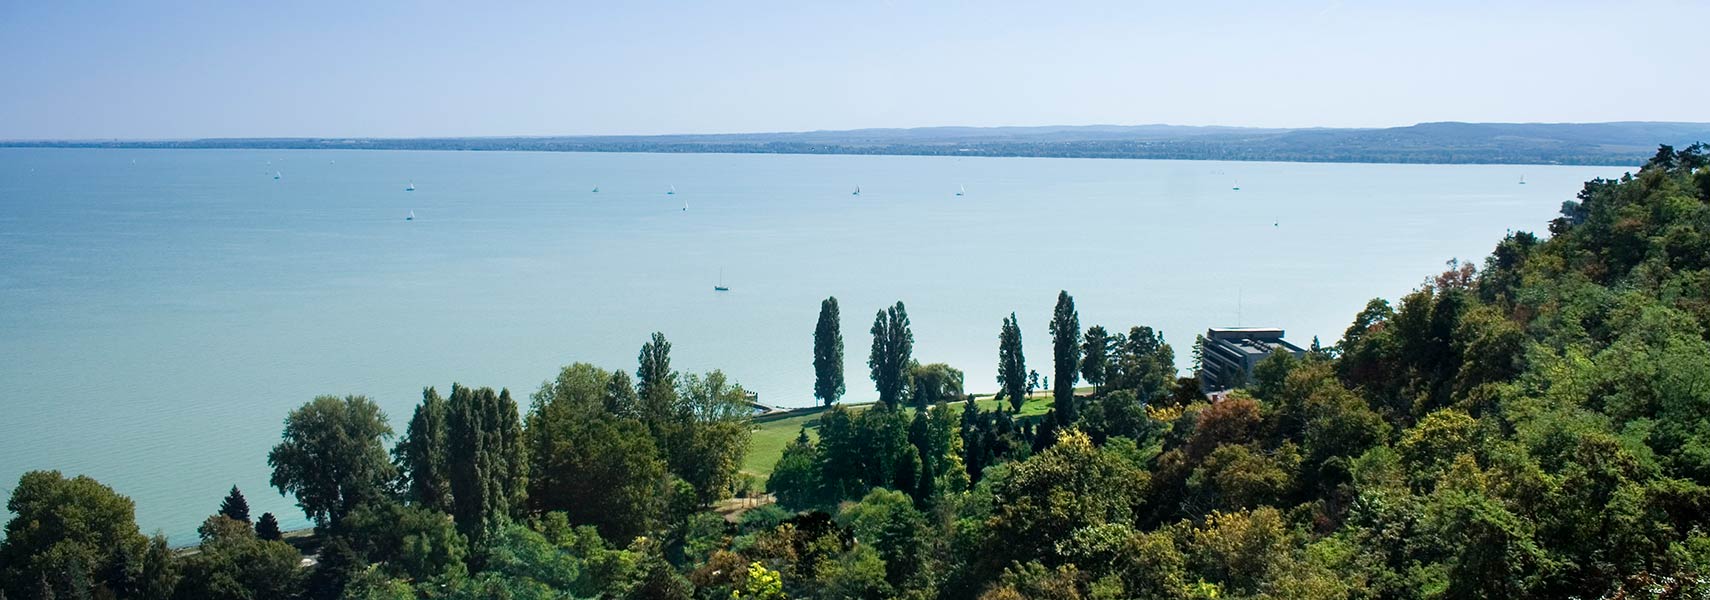 Lake Balaton at Tihany, Hungary